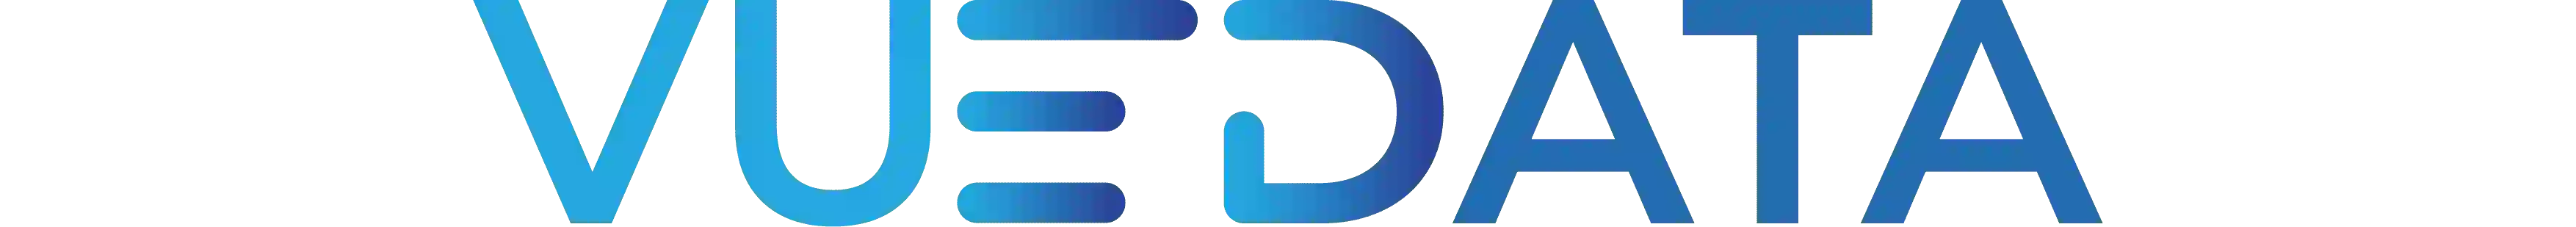 VueData-logo